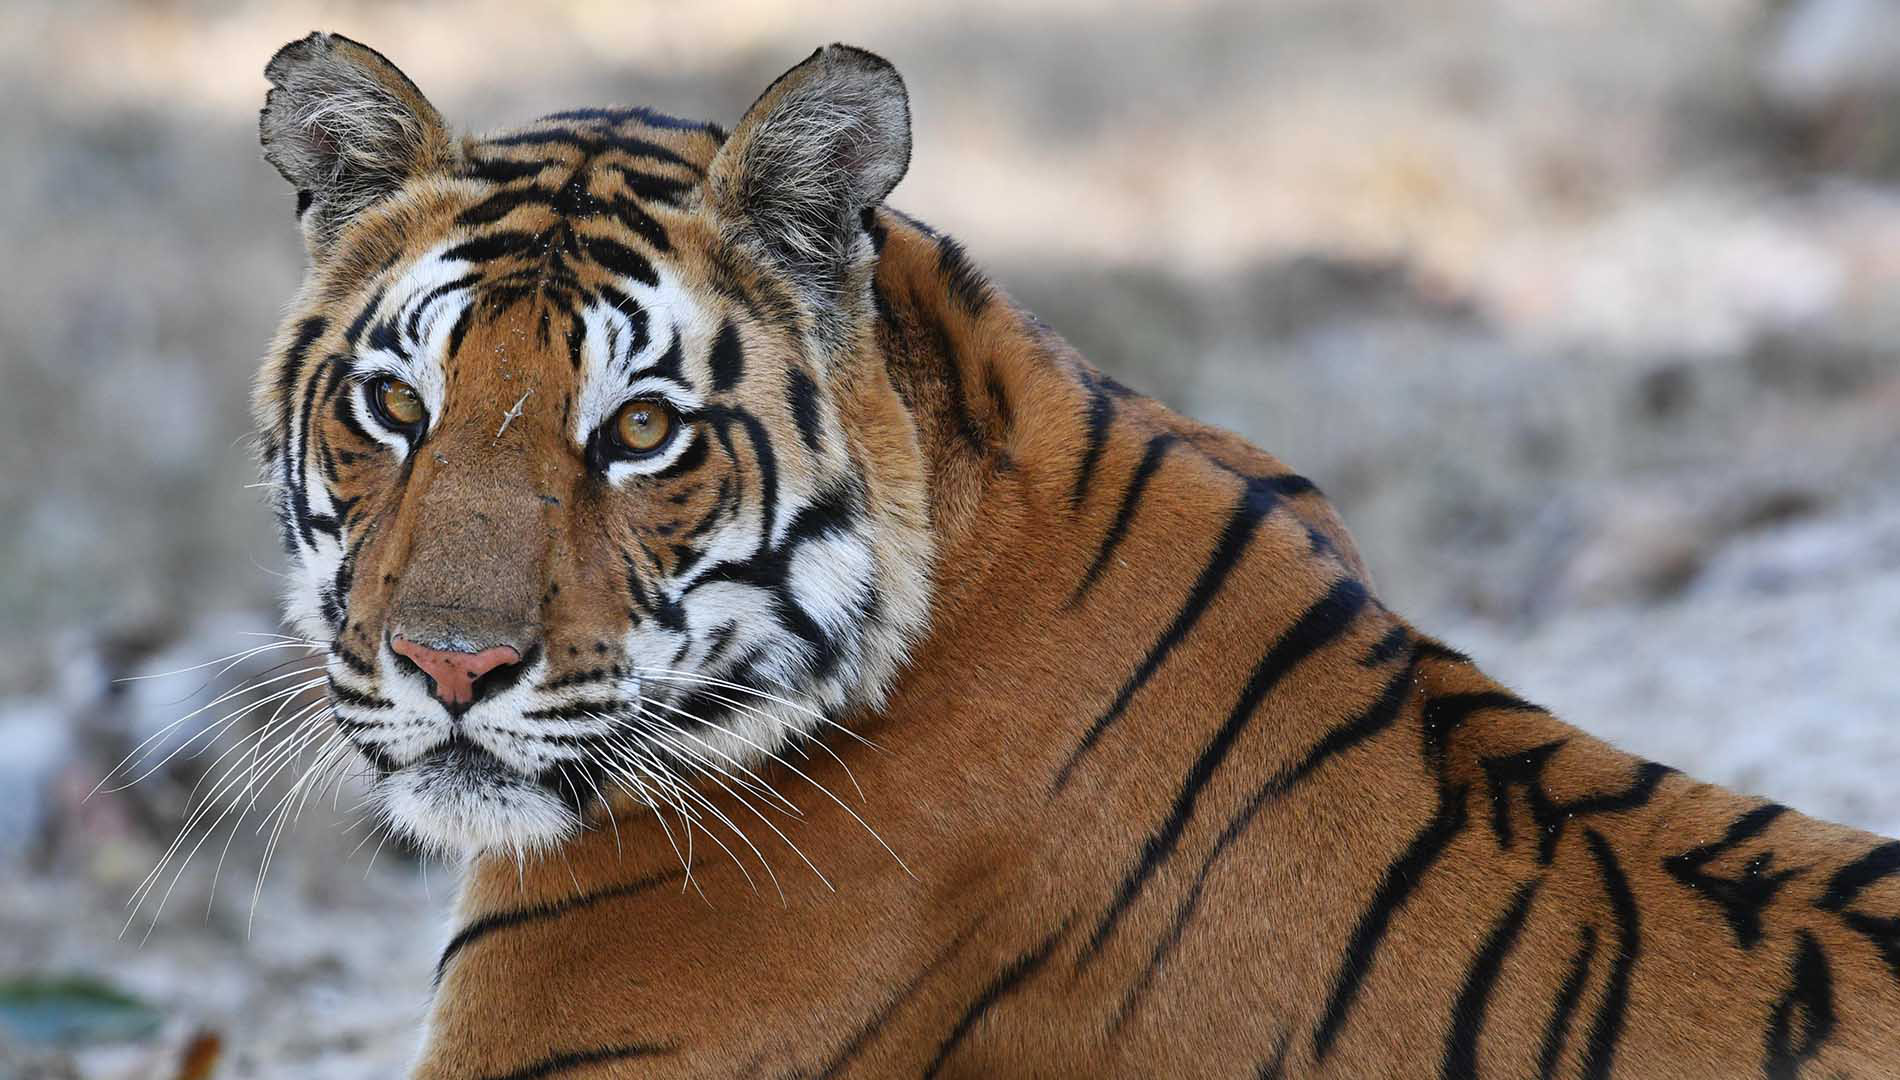 Male tiger, Kanha National Park, Madhya Pradesh, India